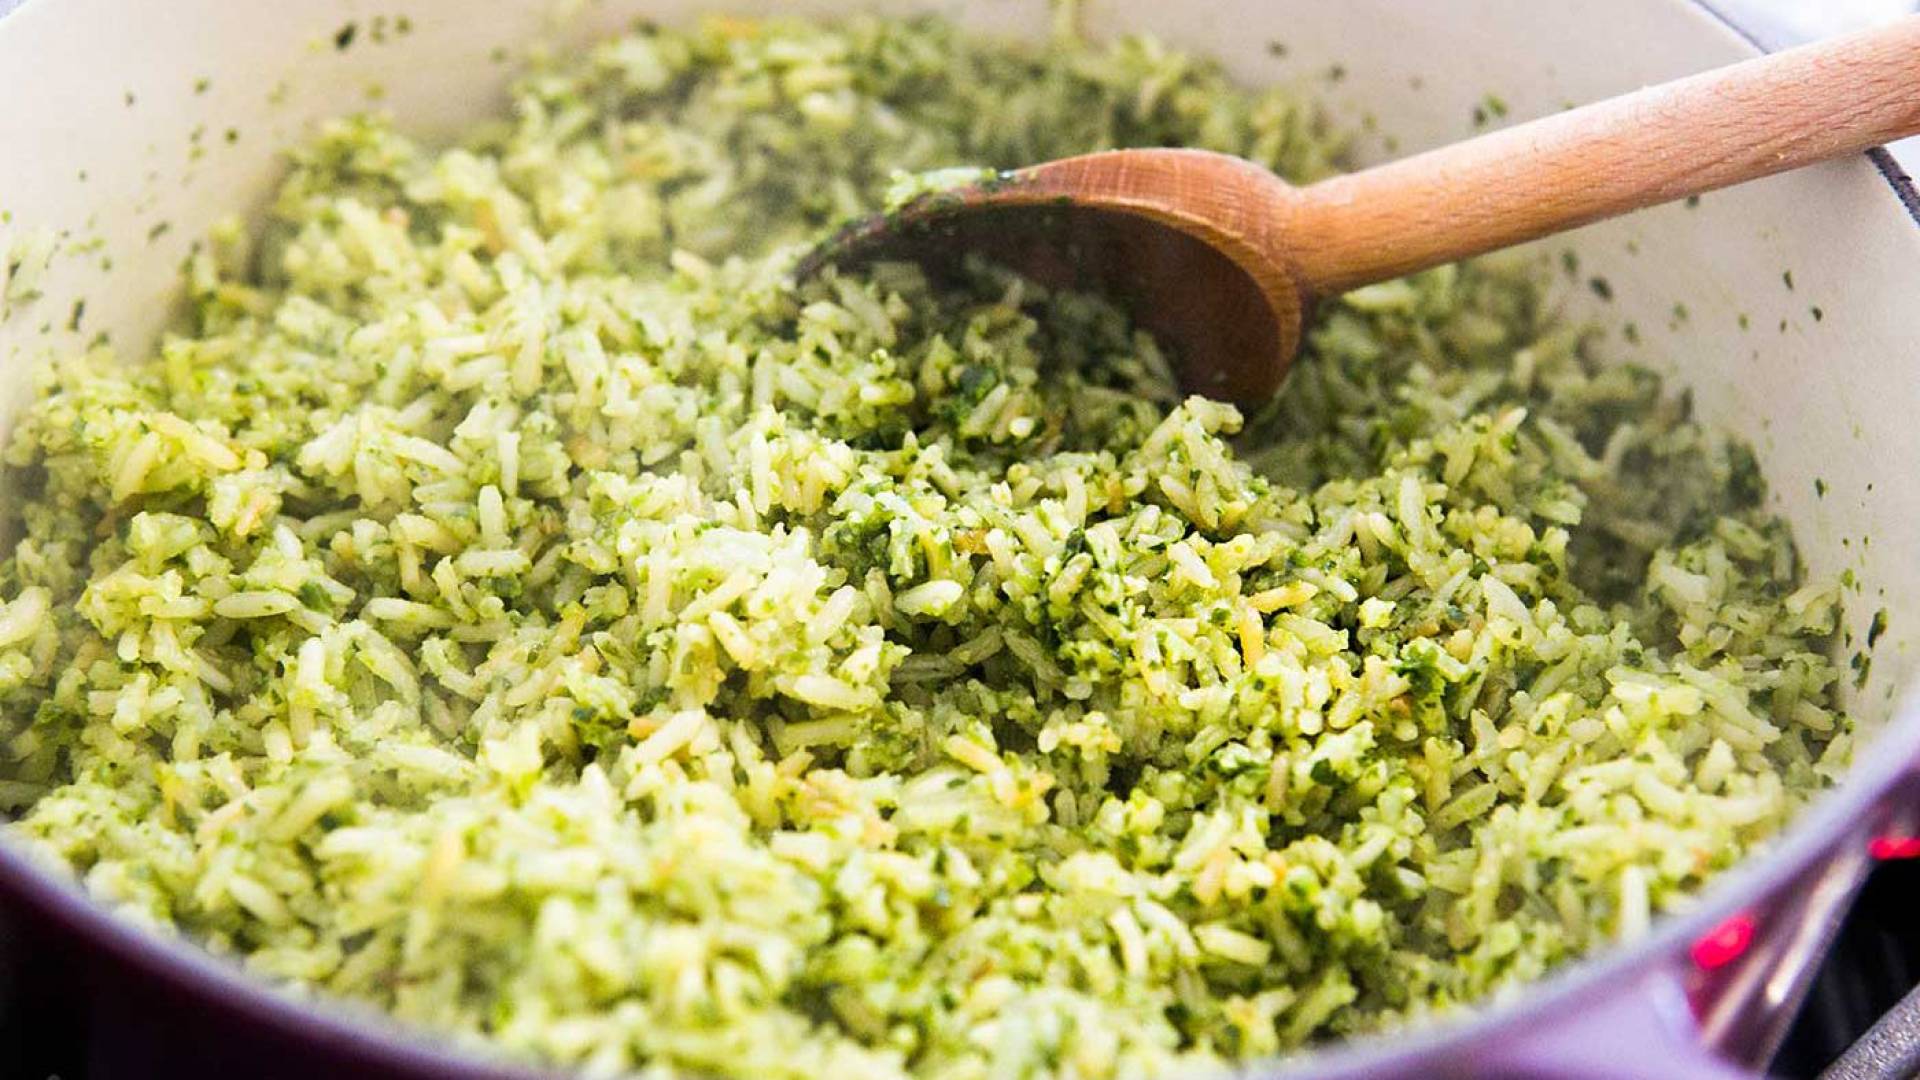 Arroz con cilantro + garbanzos guisados (vegan)